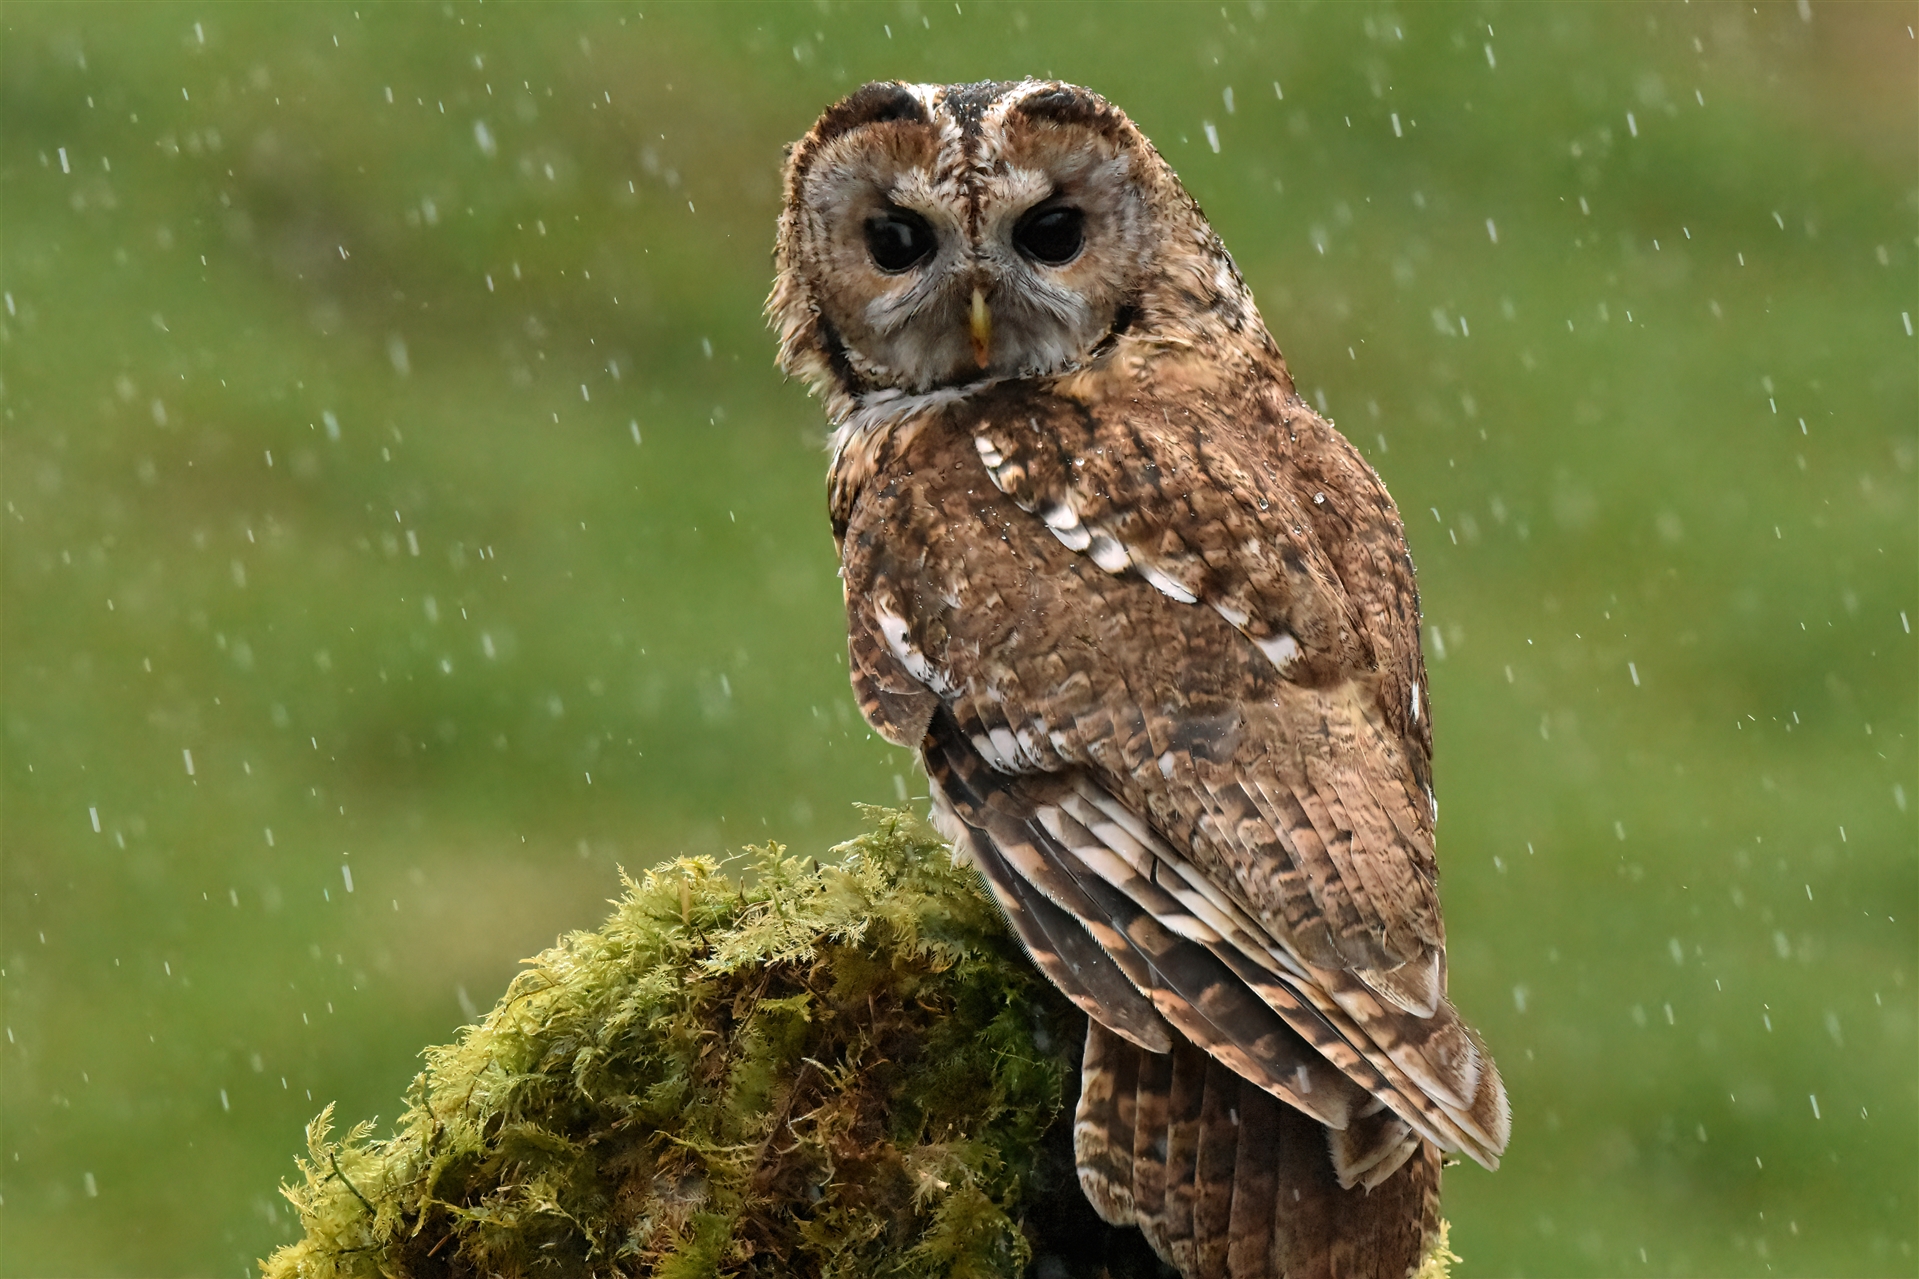 A Tawny Owl in rain, looking towards the camera.